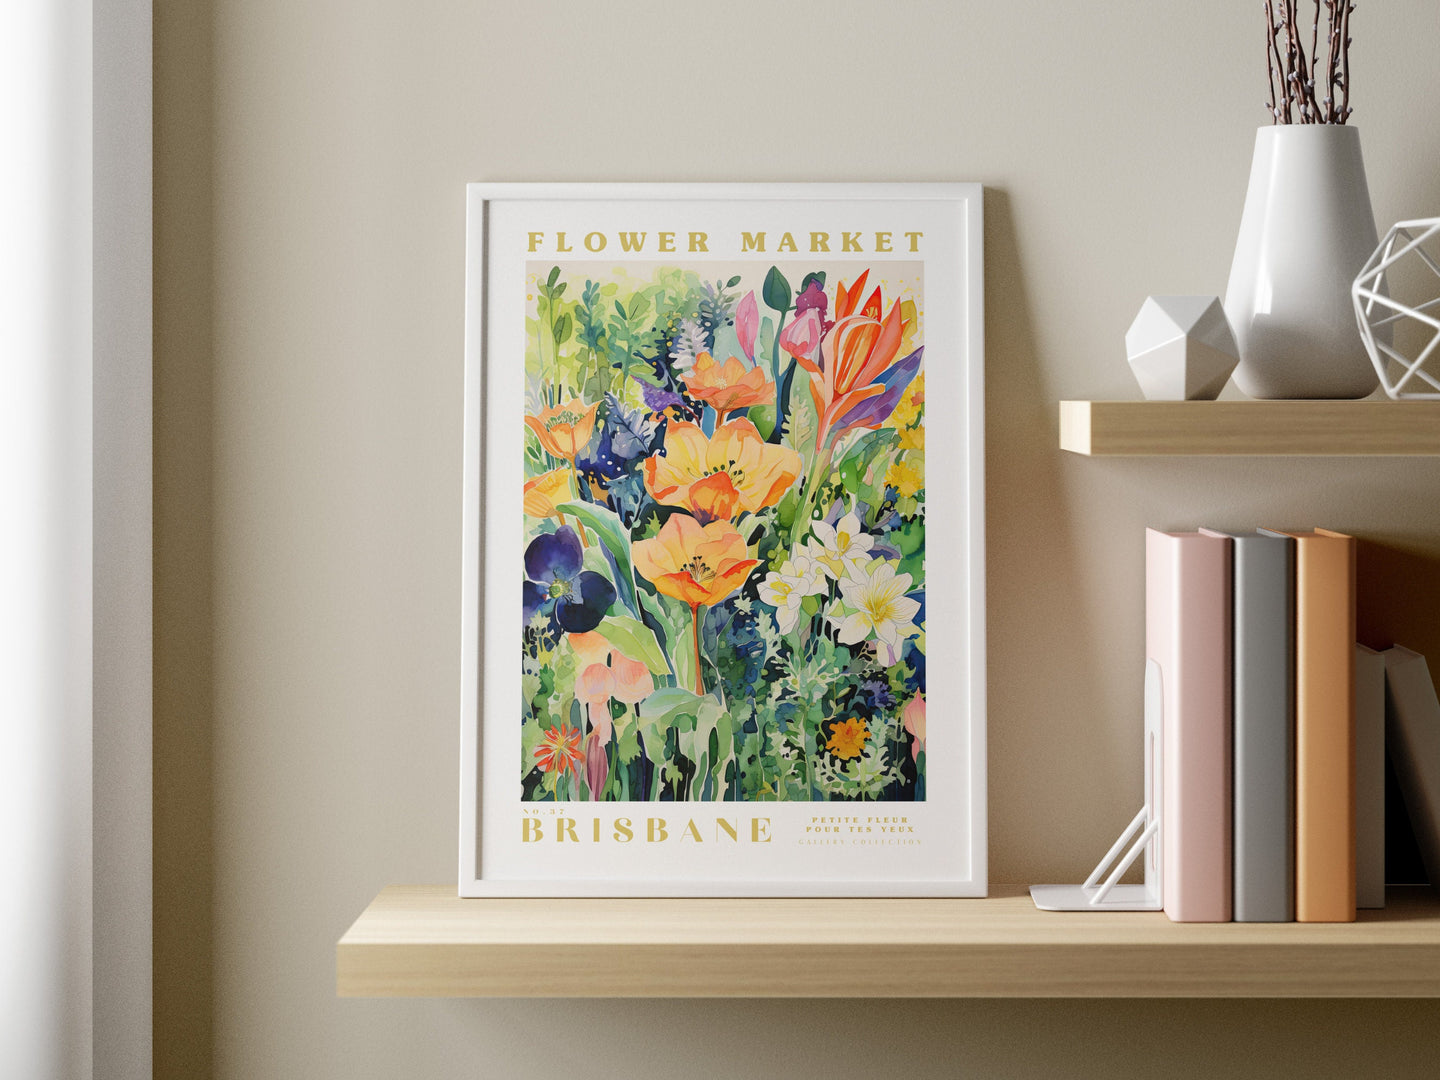 Brisbane Flower Market Print, Flowerful Wall Art, Floral Illustration, Australia Travel Art, Botanical Wall Decor, Housewarming Gift